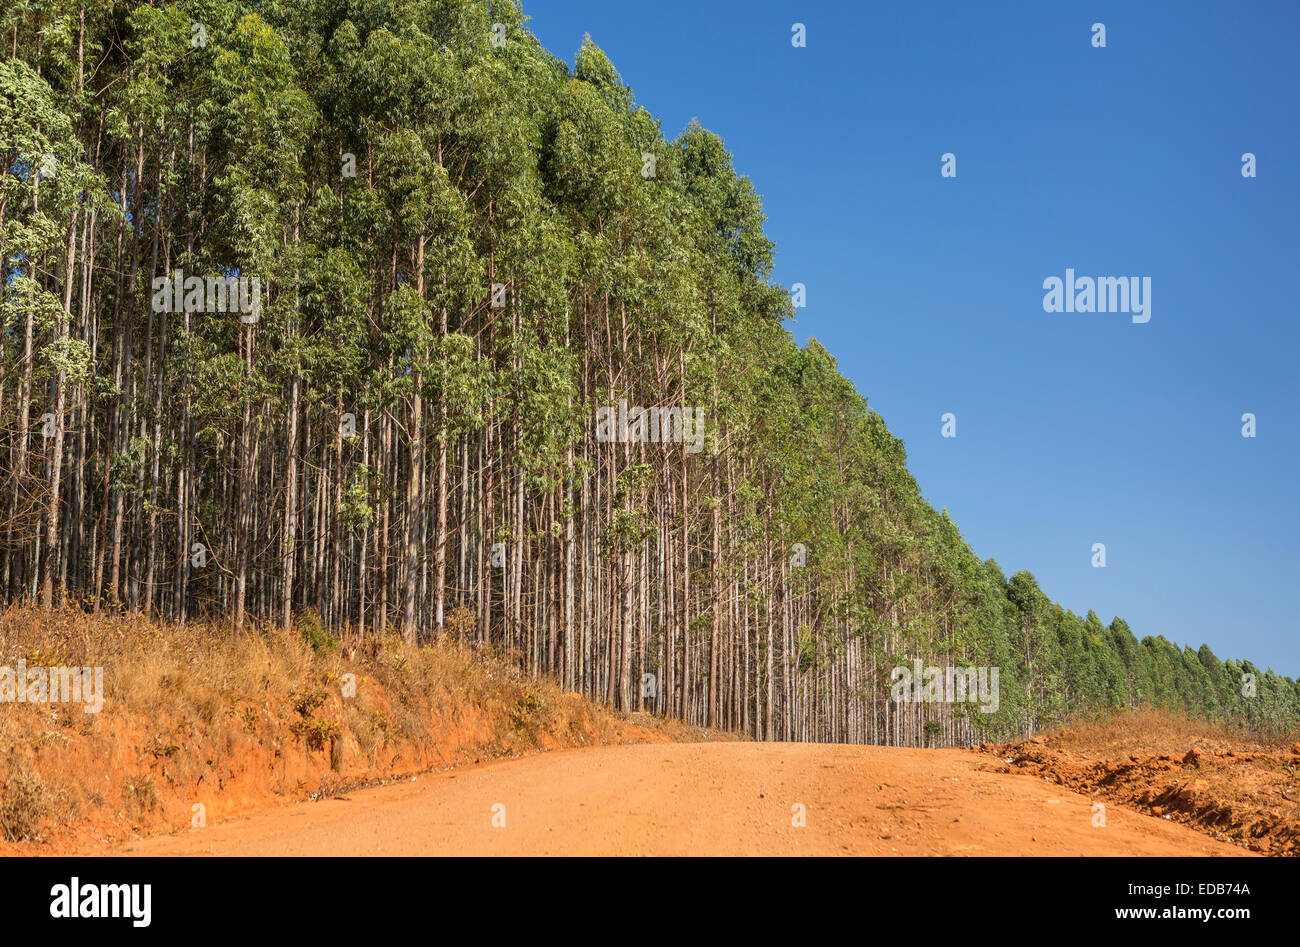 HHOHHO, Swasiland, Afrika - Holz Industrielandschaft, Bäume und Straße. Stockfoto